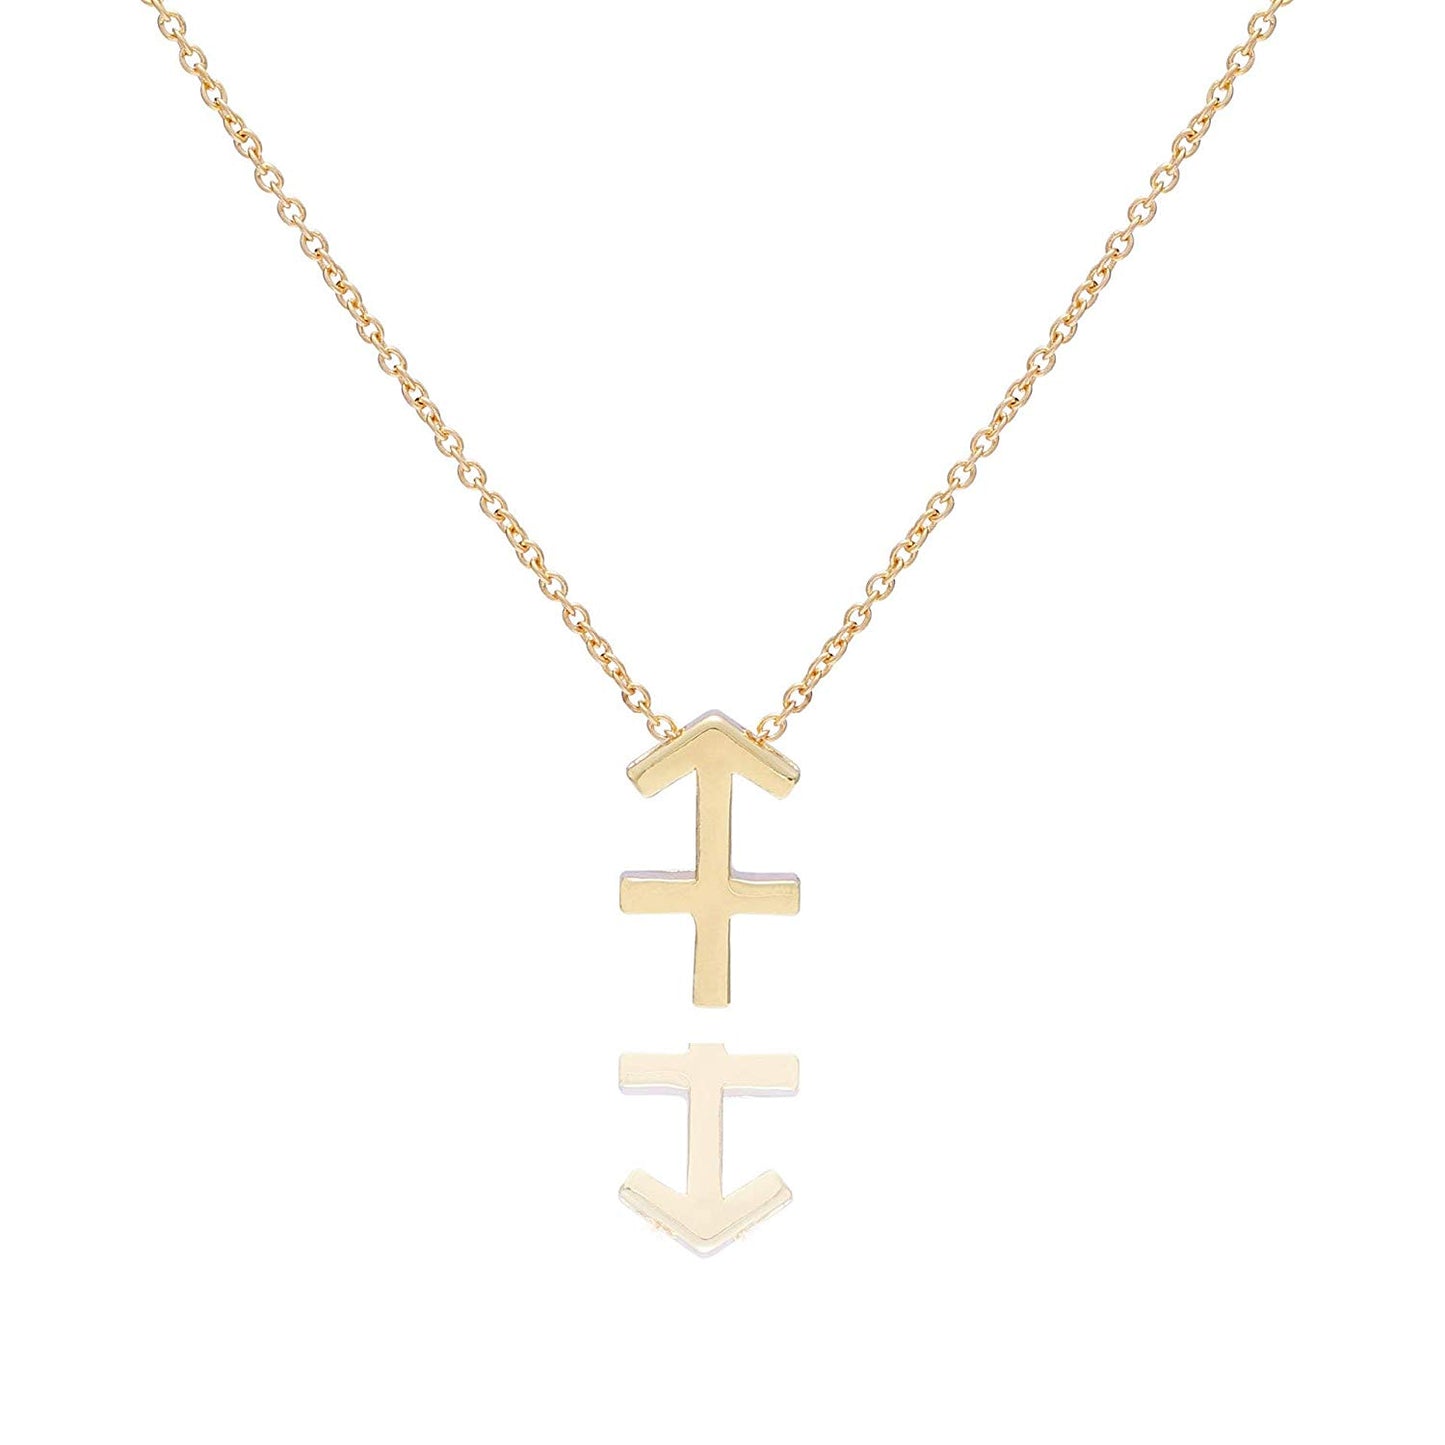 Sagittarius ( Nov 22 - Dec 21 ) Gold - Kuberlo - Best Gift for - Imitation Jewellery - Designer Jewellery - one gram gold - fashion jewellery